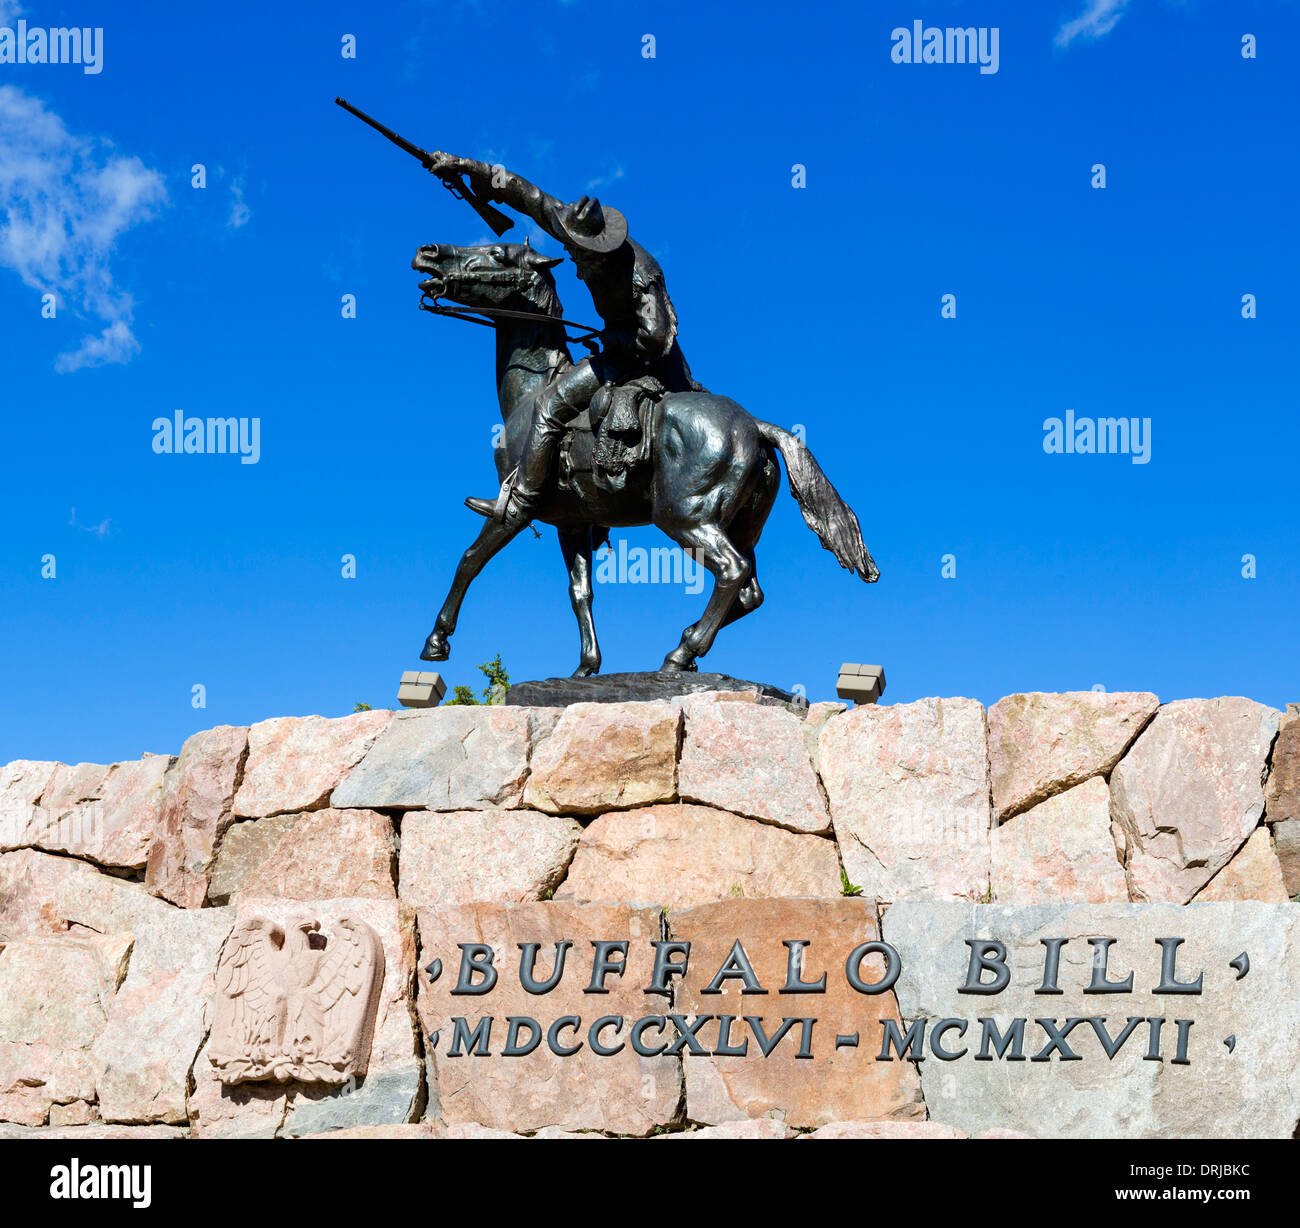 Statue of Buffalo Bill Cody on horseback near the Buffalo Bill Historical Center, Cody, Wyoming, USA Stock Photo